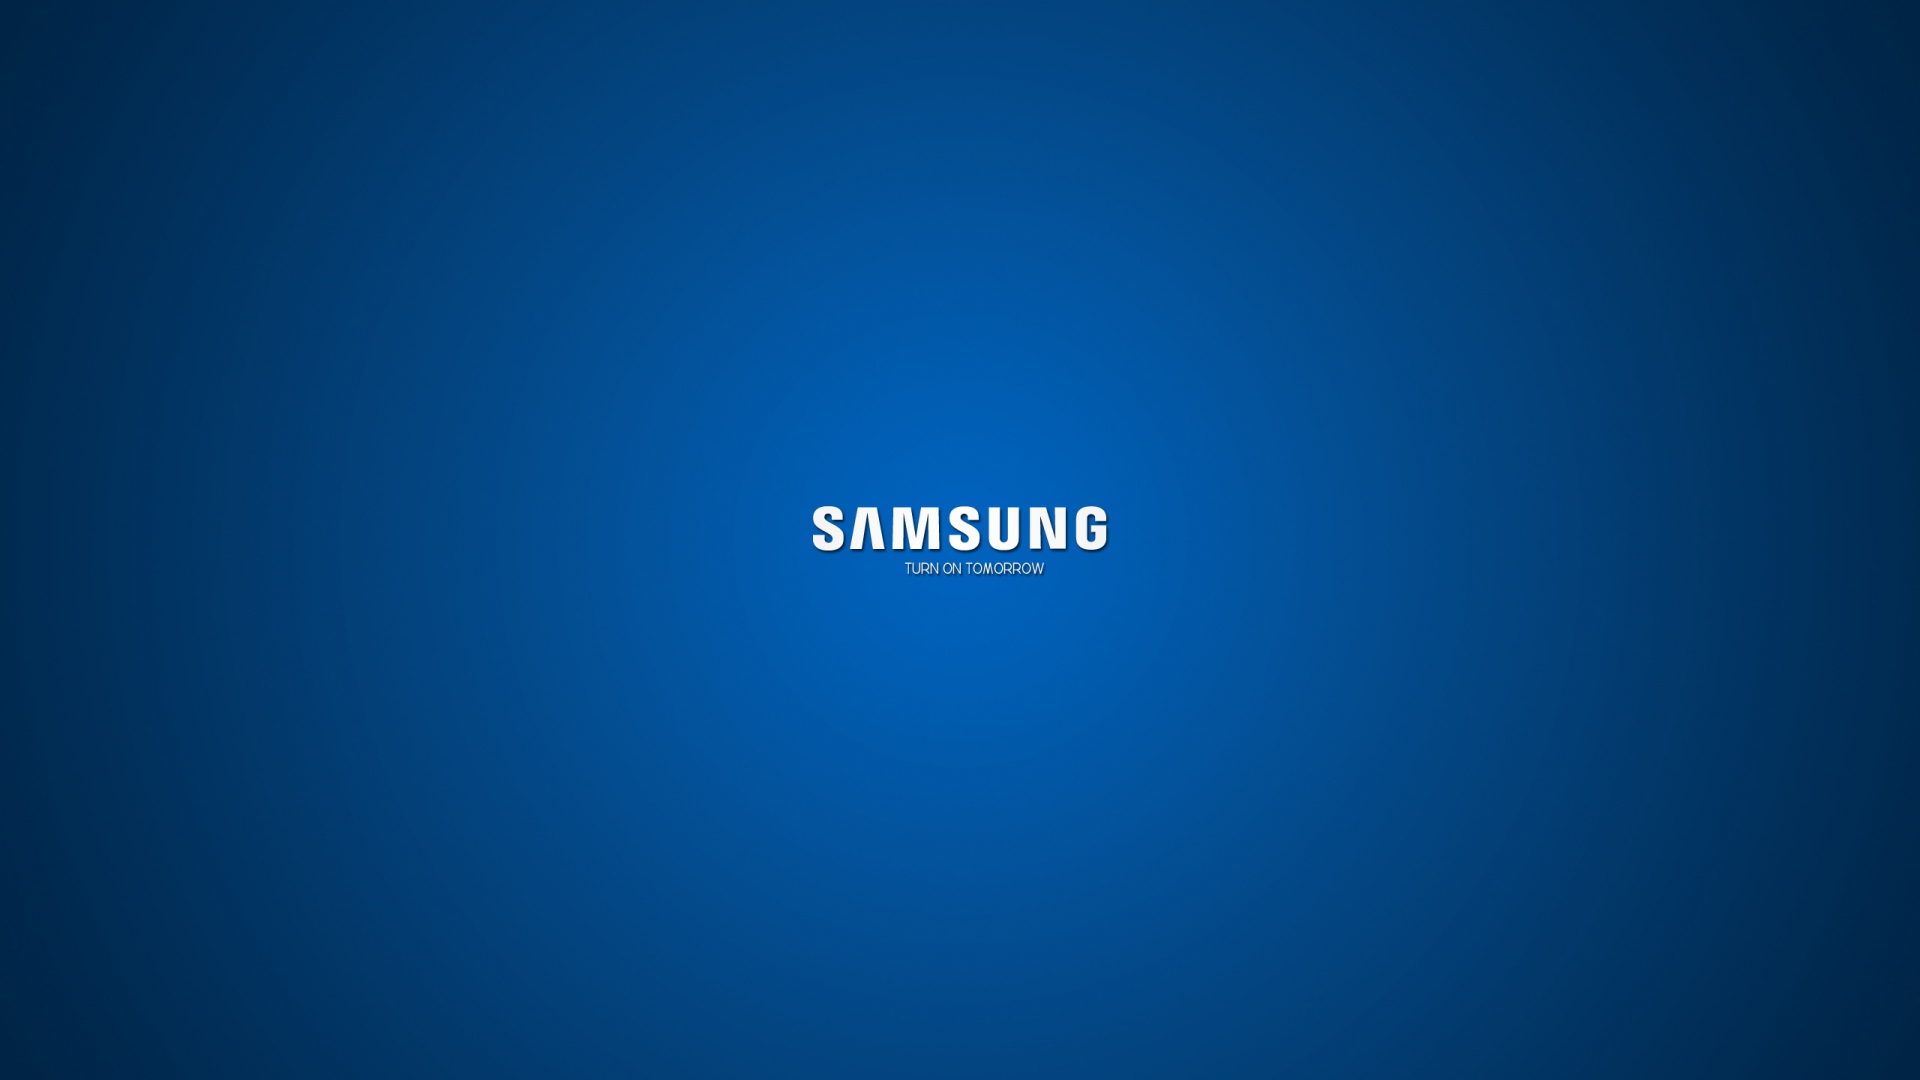 samsung_company_logo_blue_white_30995_1920x1080